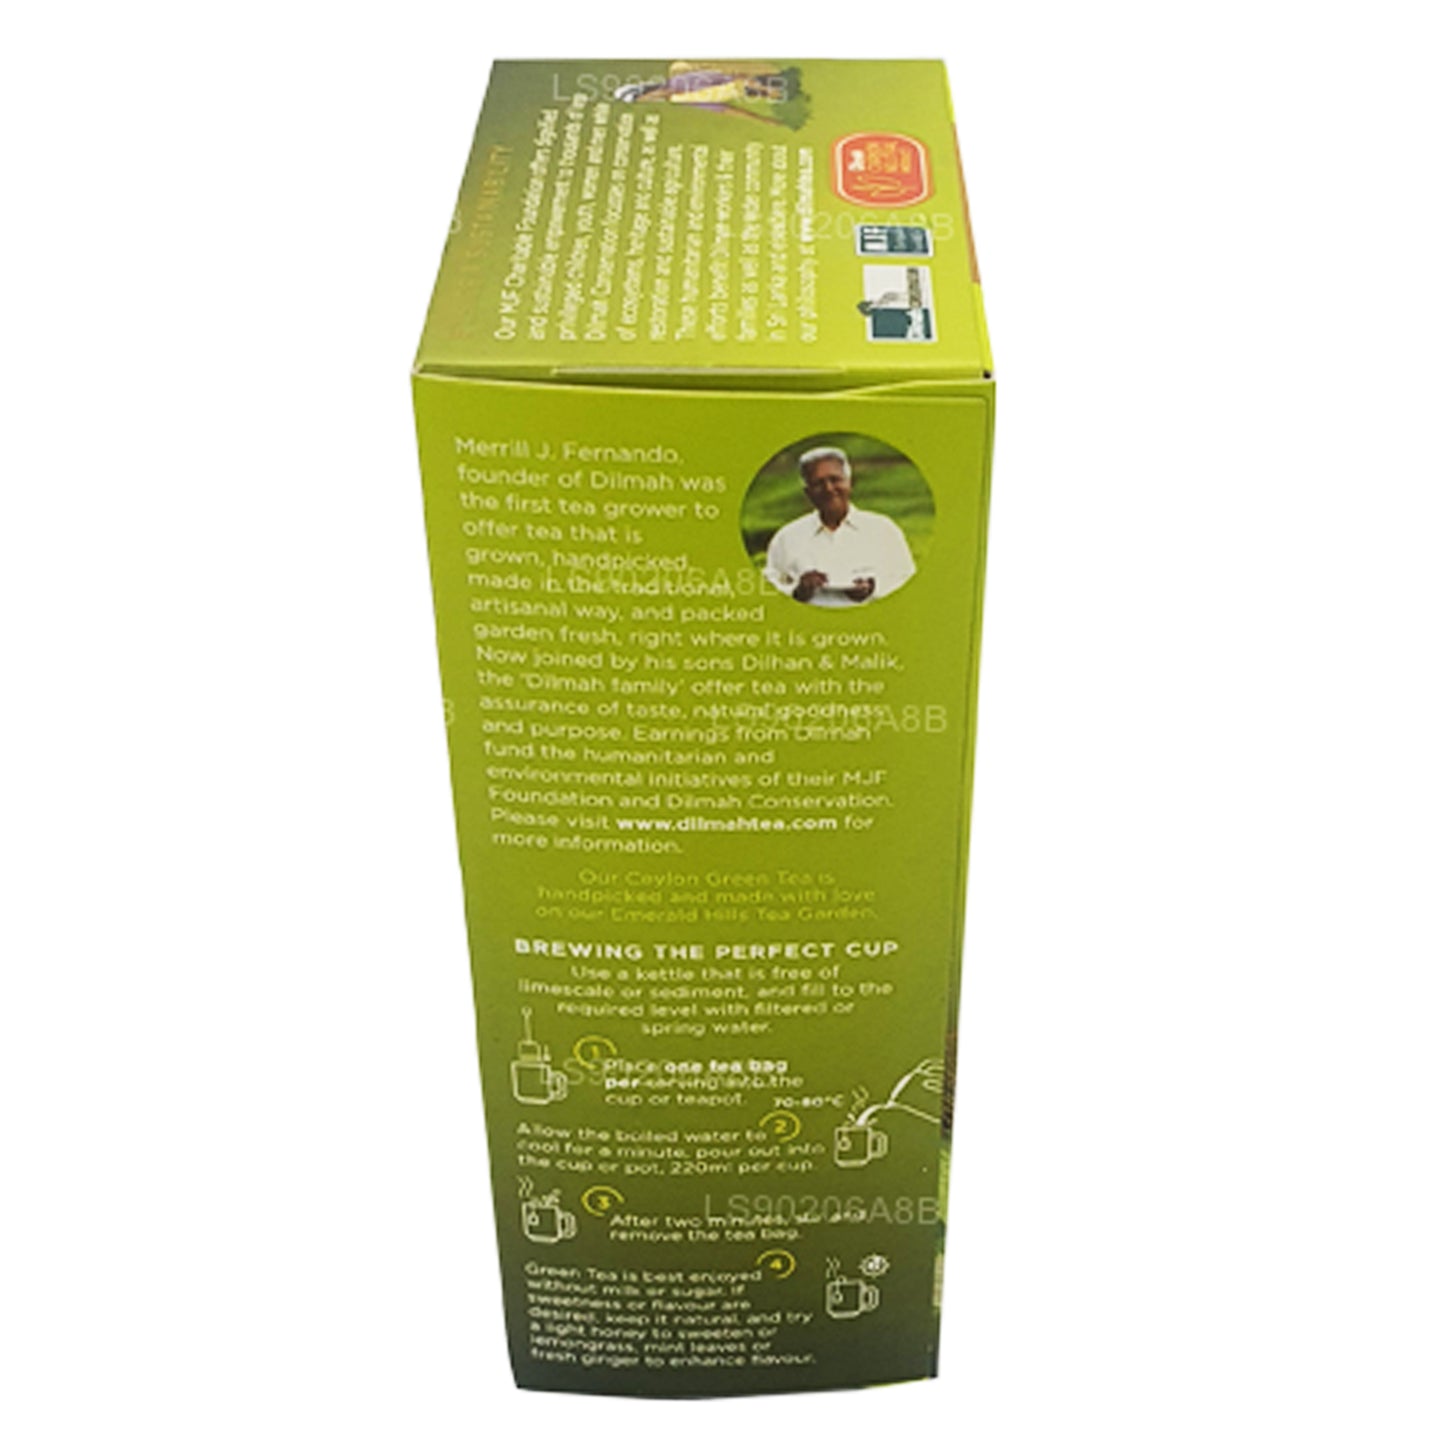 Dilmah Czysta Ceylon Zielona Herbata z Trawą Lemongrass Herbata (40g) 20 torebek